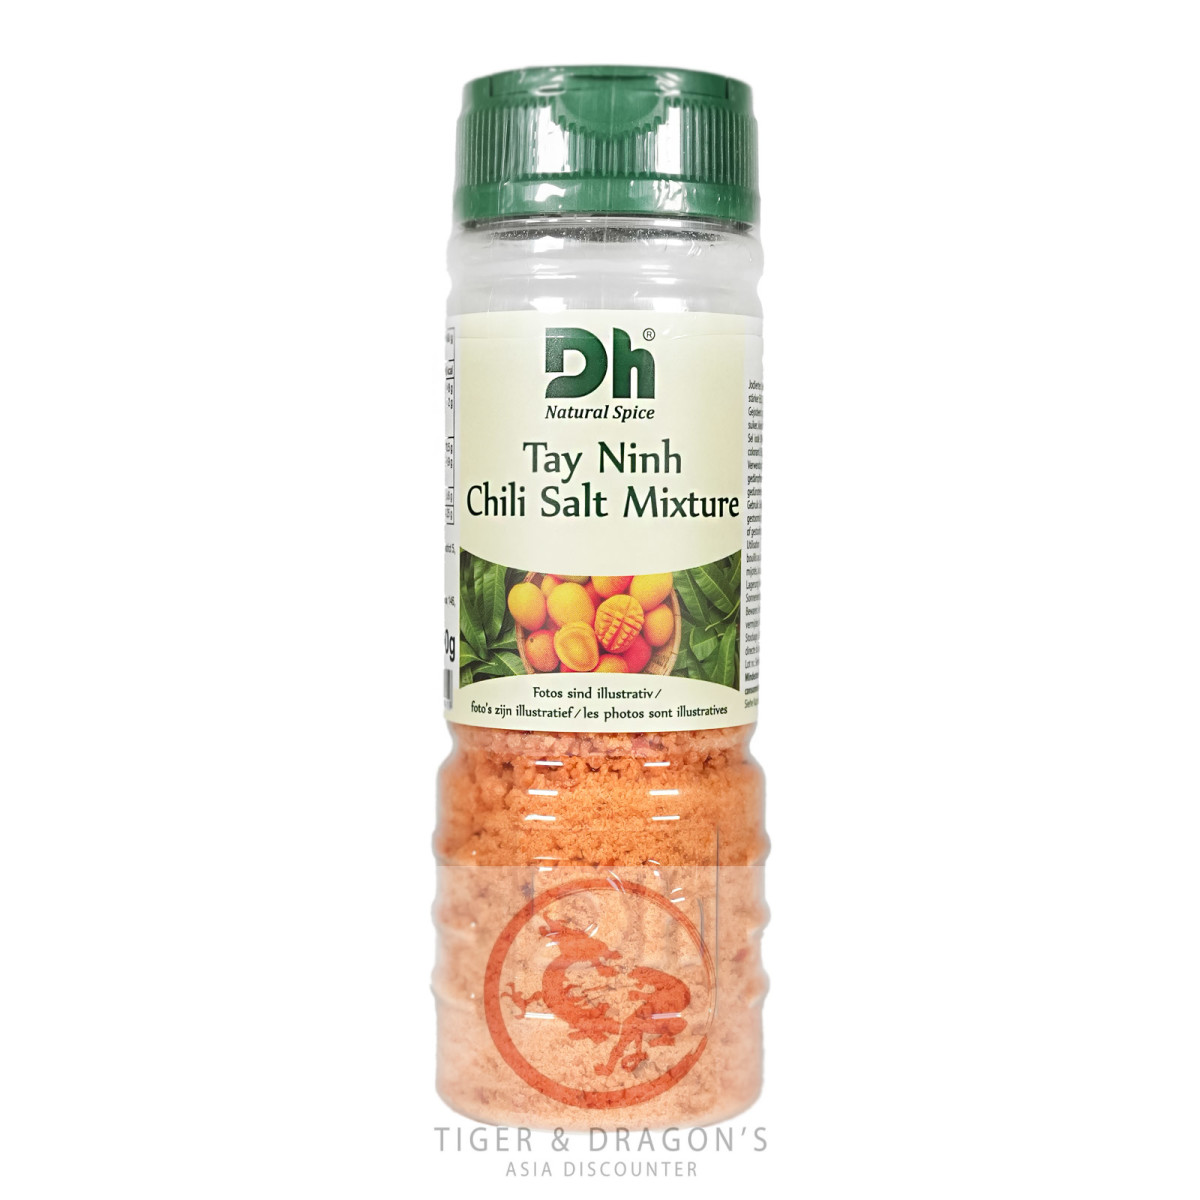 DH Food Muoi Ot Würzmischung Salz  Chili 120g